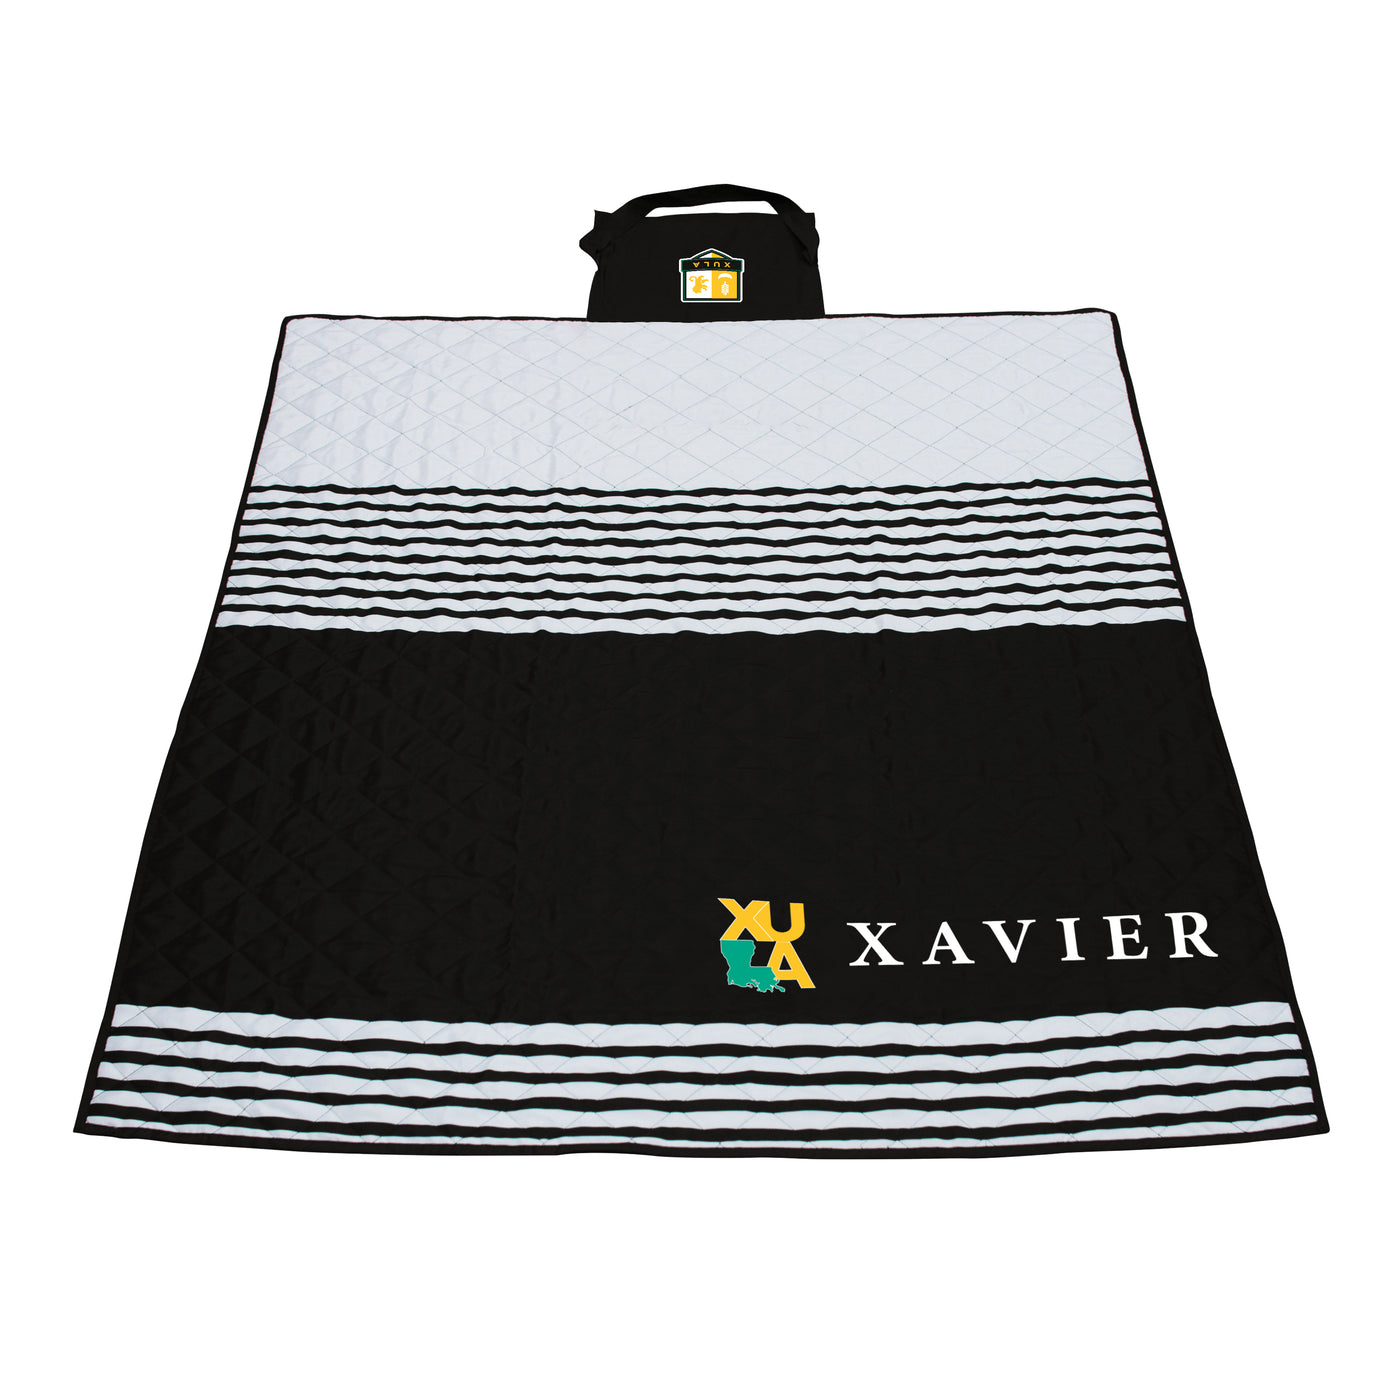 Xavier of Louisiana Outdoor Blanket